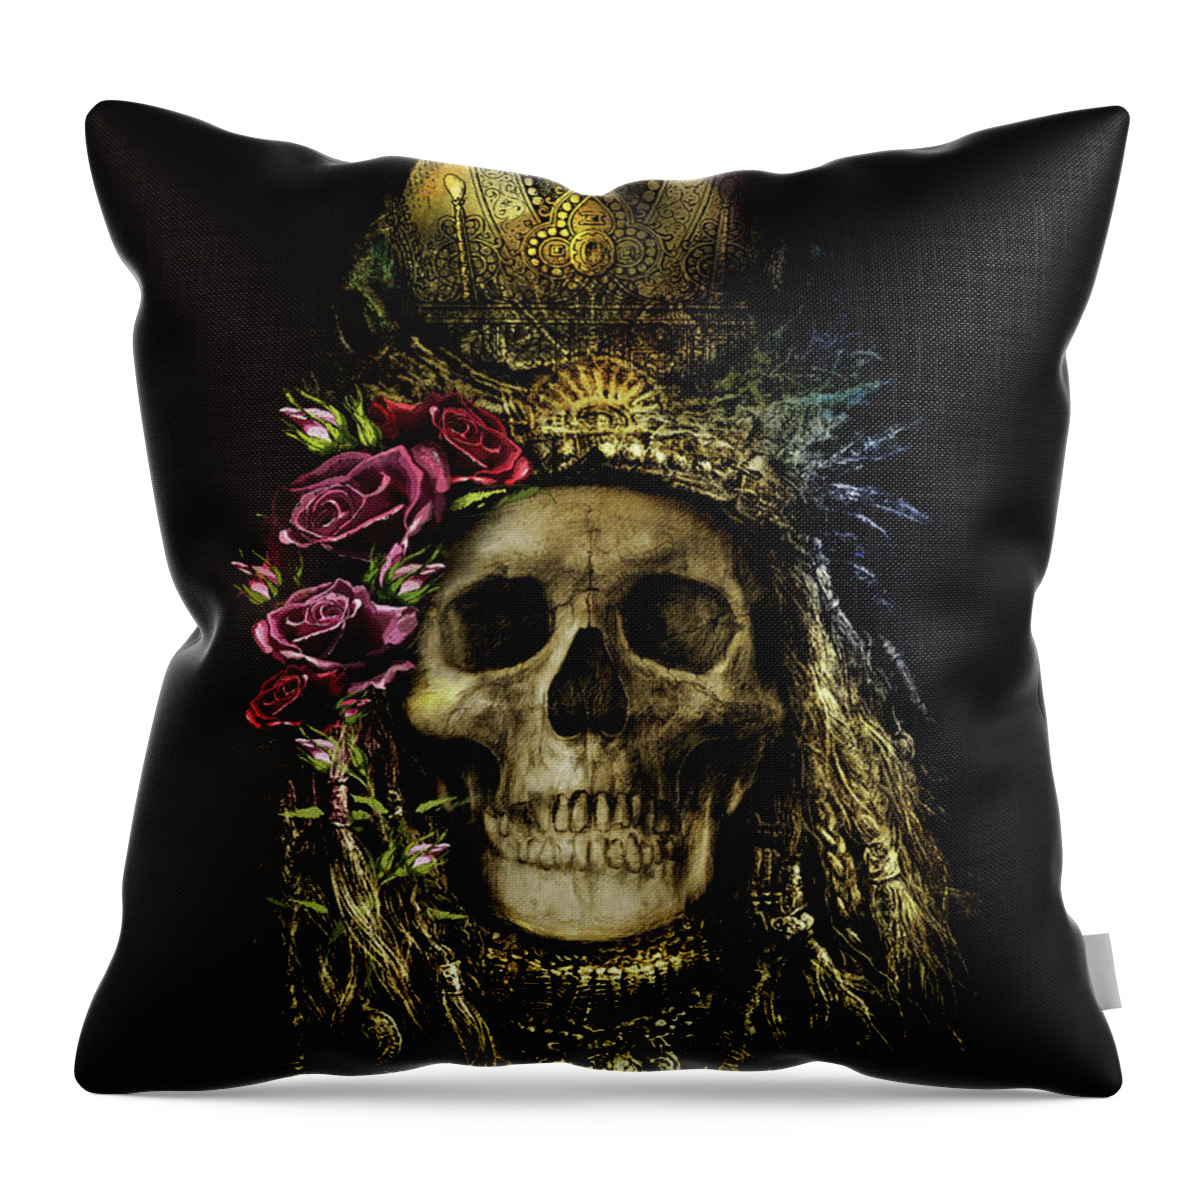 Flowers Throw Pillow featuring the digital art Skull Art Queen SS16 by Xrista Stavrou